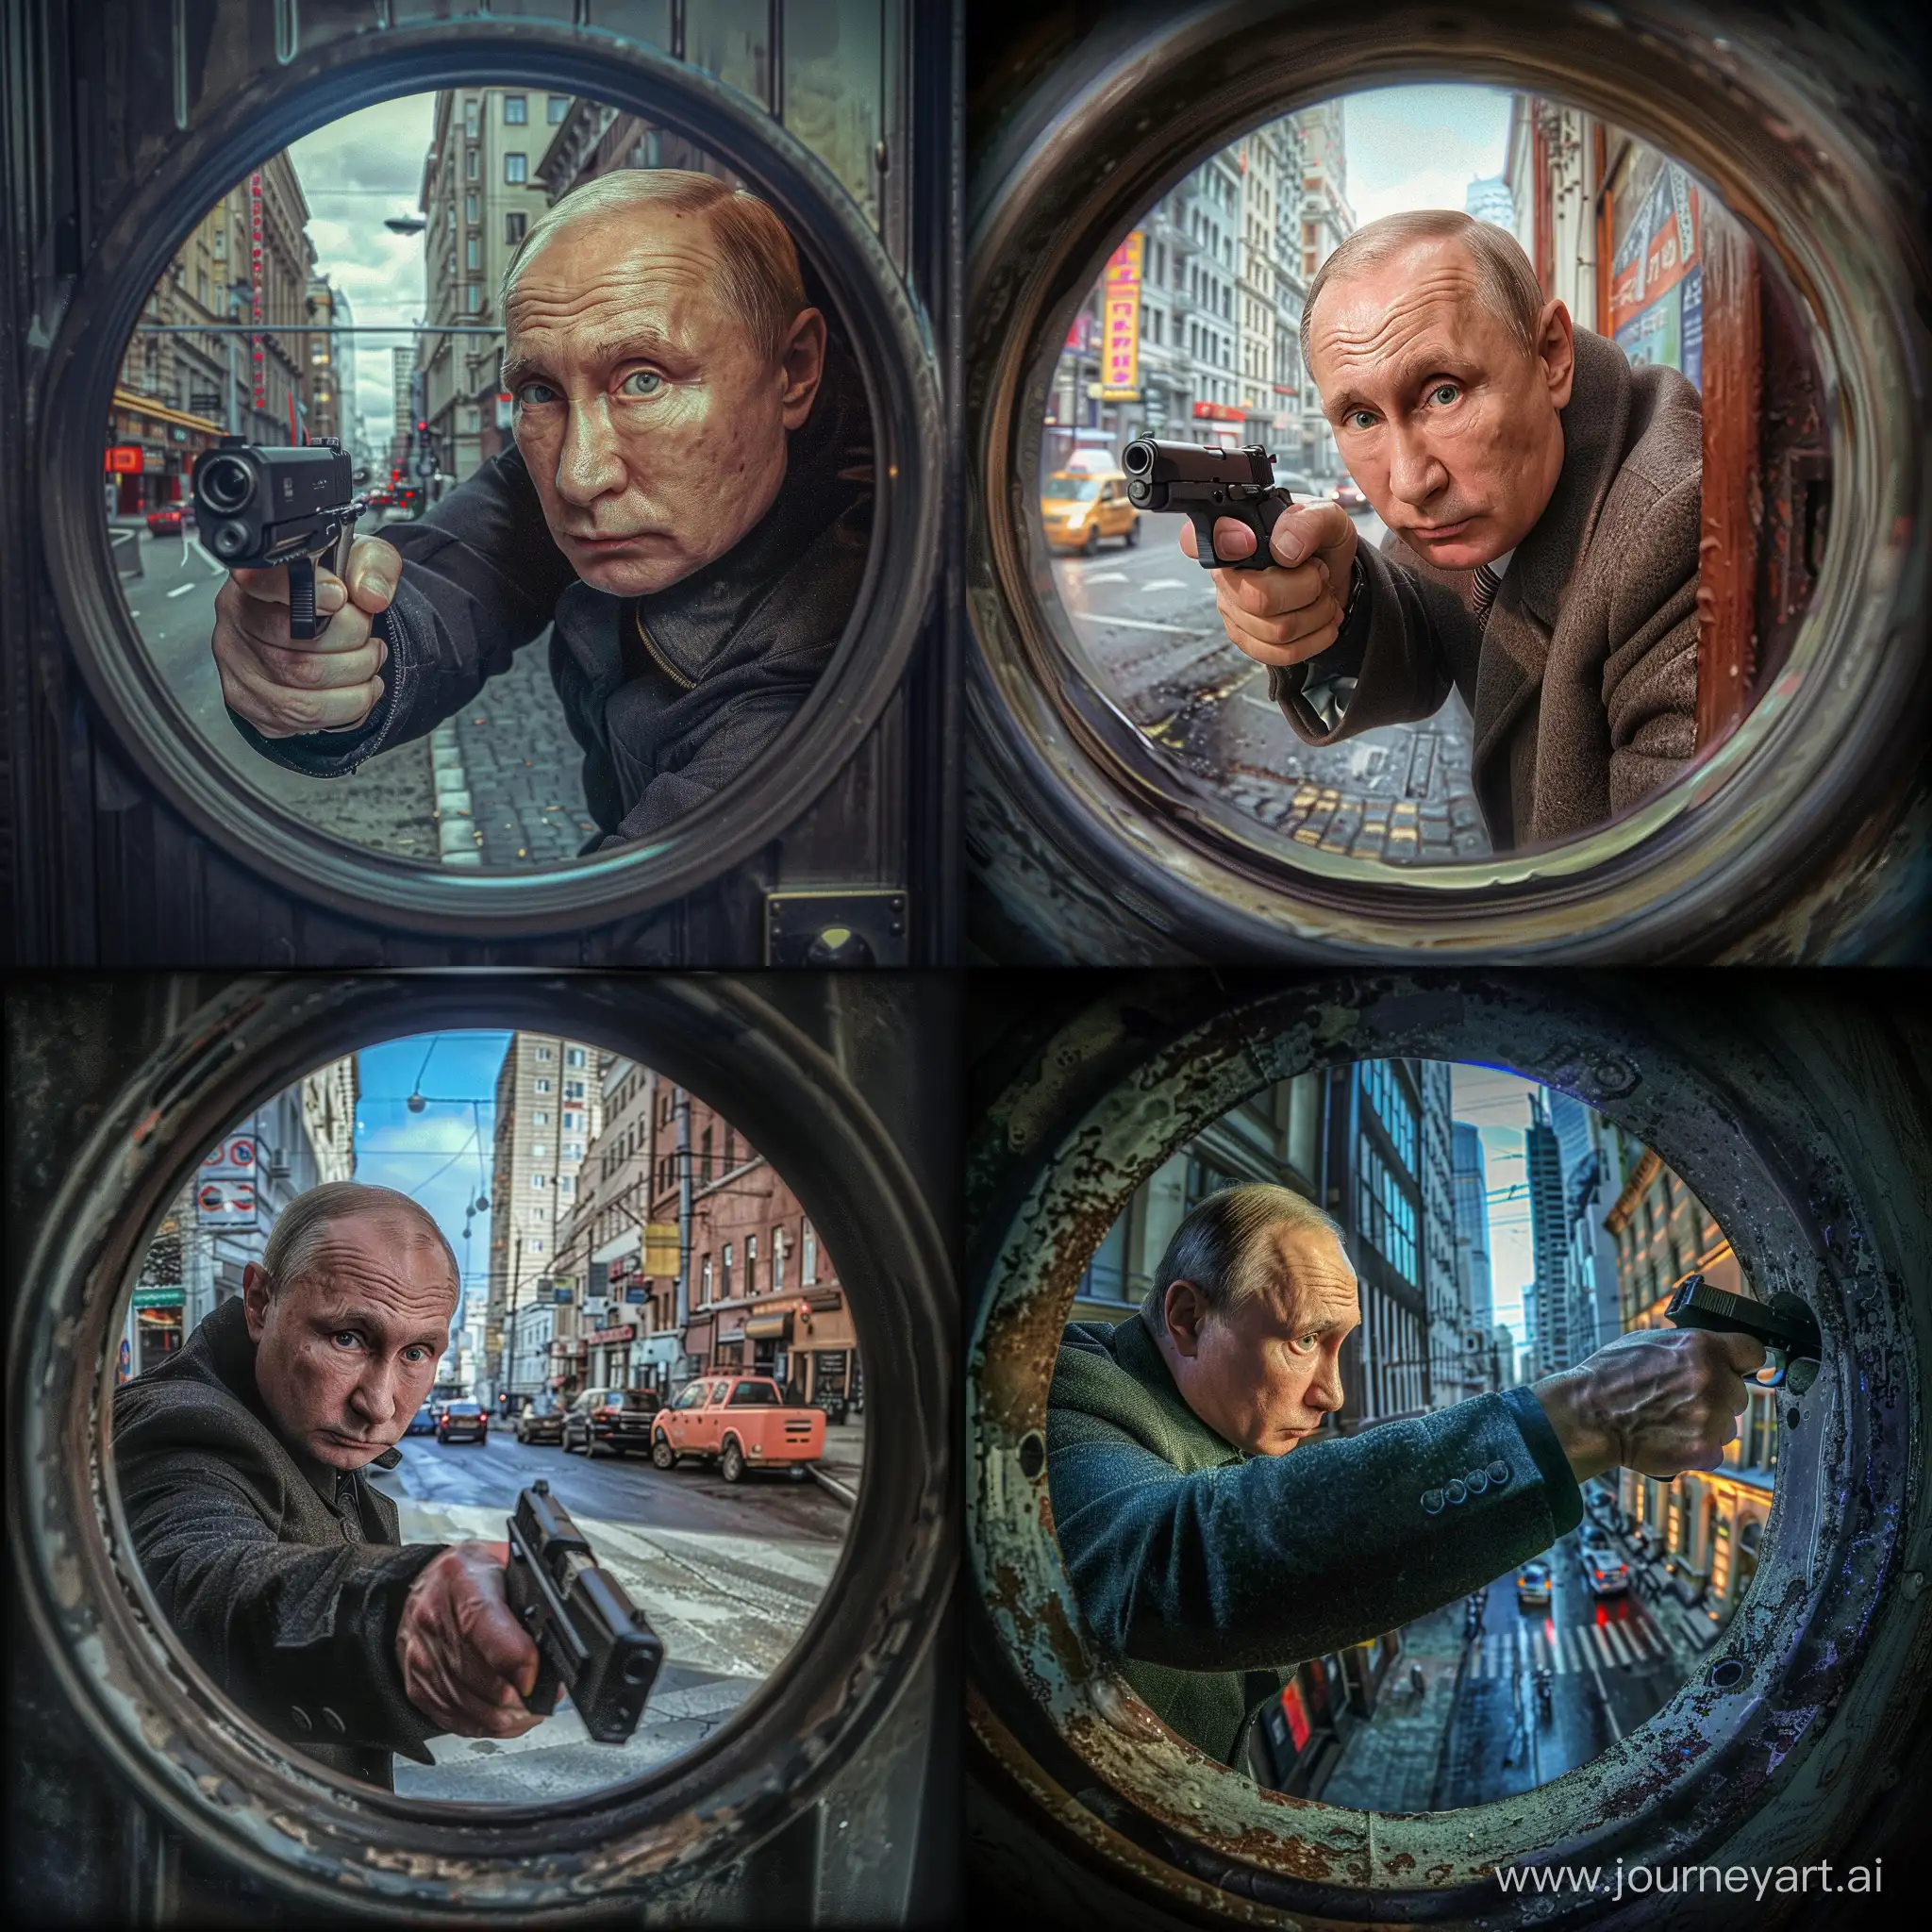 Putin-Spying-with-Gun-Through-Peephole-in-American-City